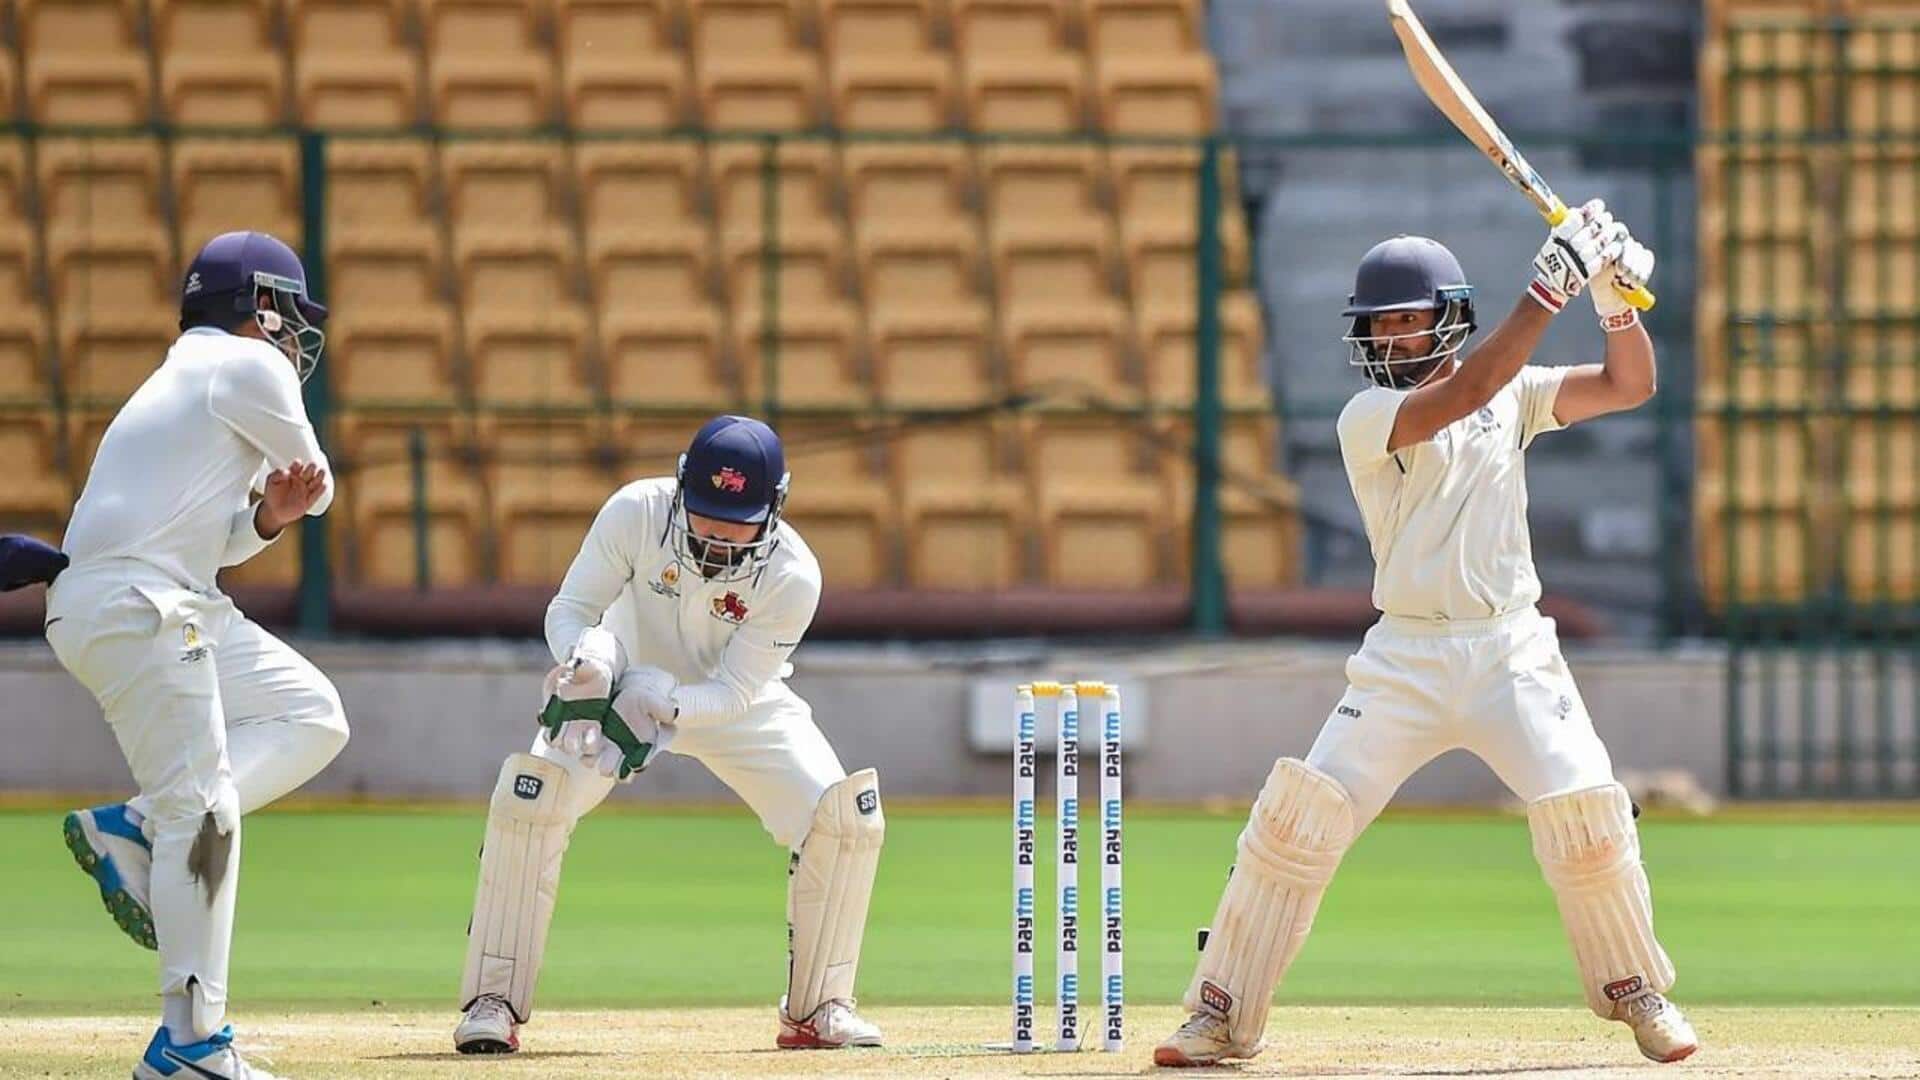 Ranji Trophy: Yash Dubey slams innings-defining 94 for MP